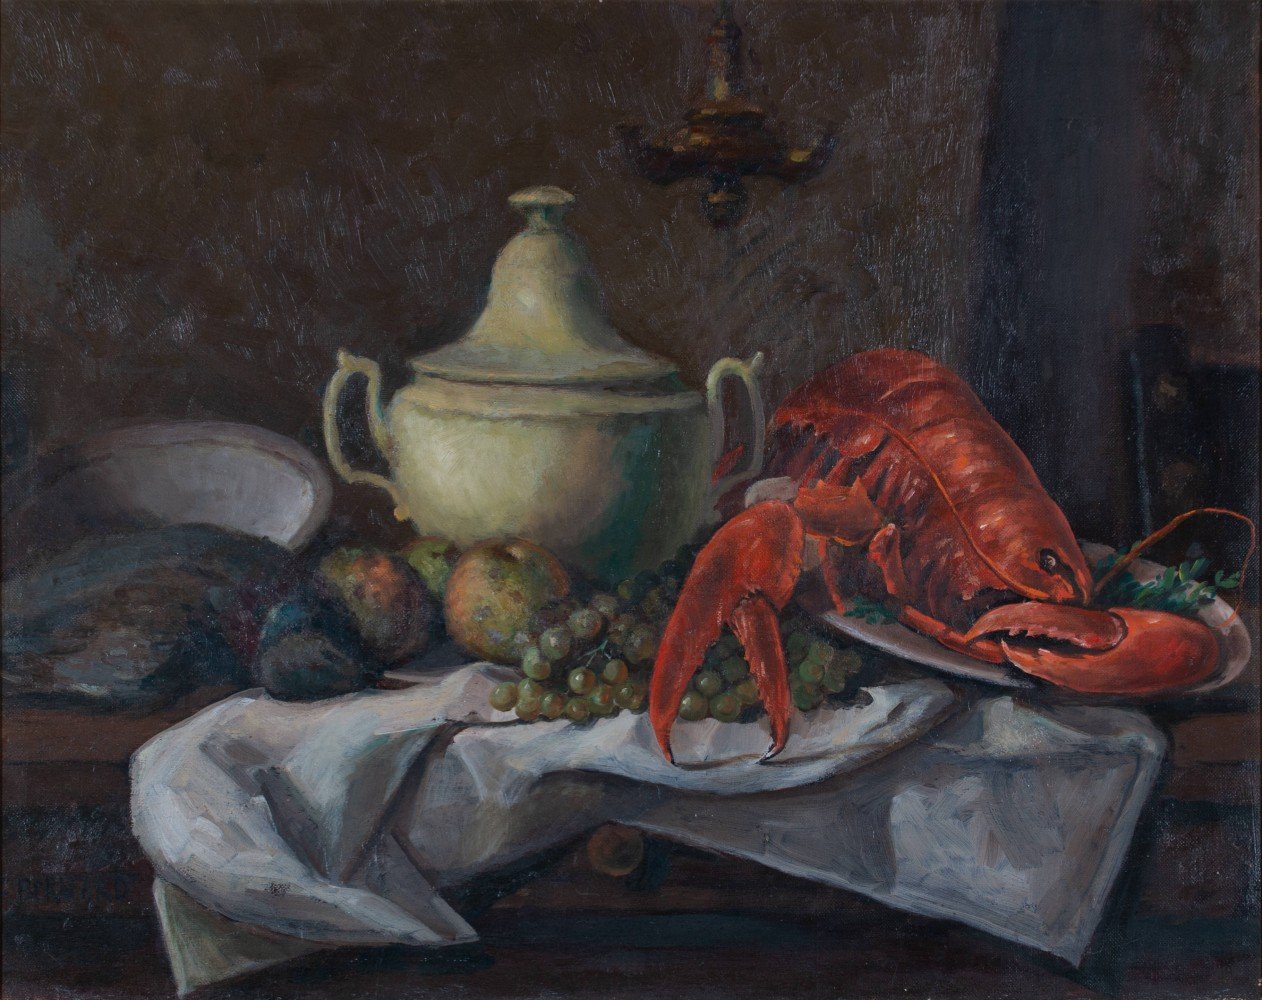 Attributed to Francois Bernard, Still Life with Lobster